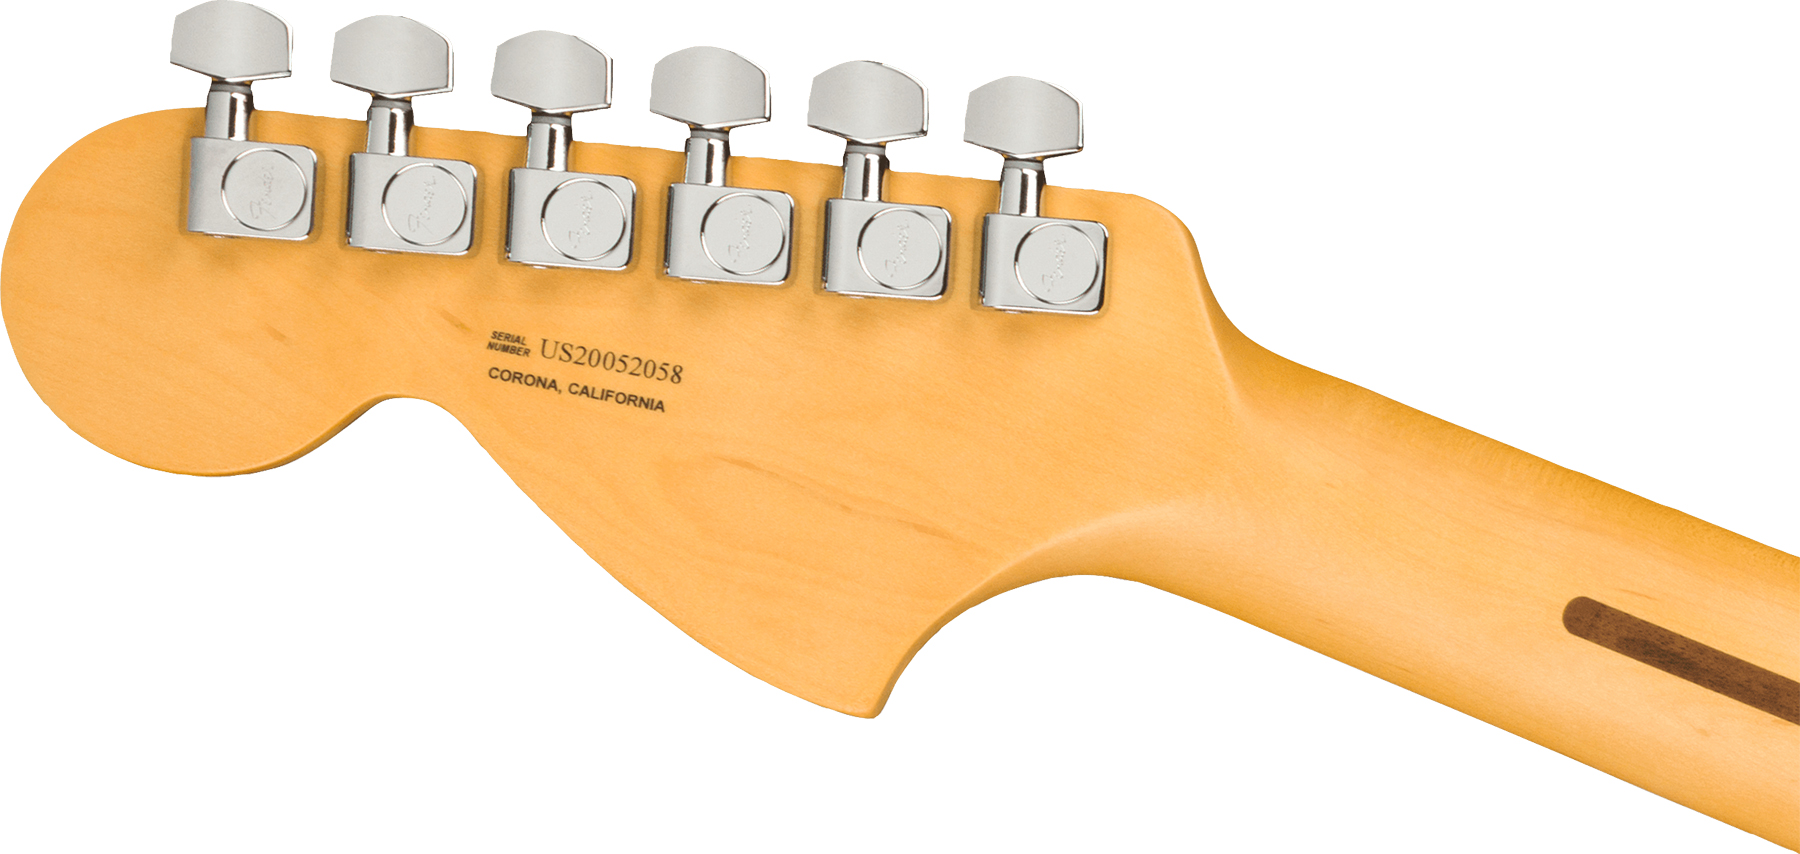 Fender Tele Deluxe American Professional Ii Usa Mn - Miami Blue - Guitarra eléctrica con forma de tel - Variation 1